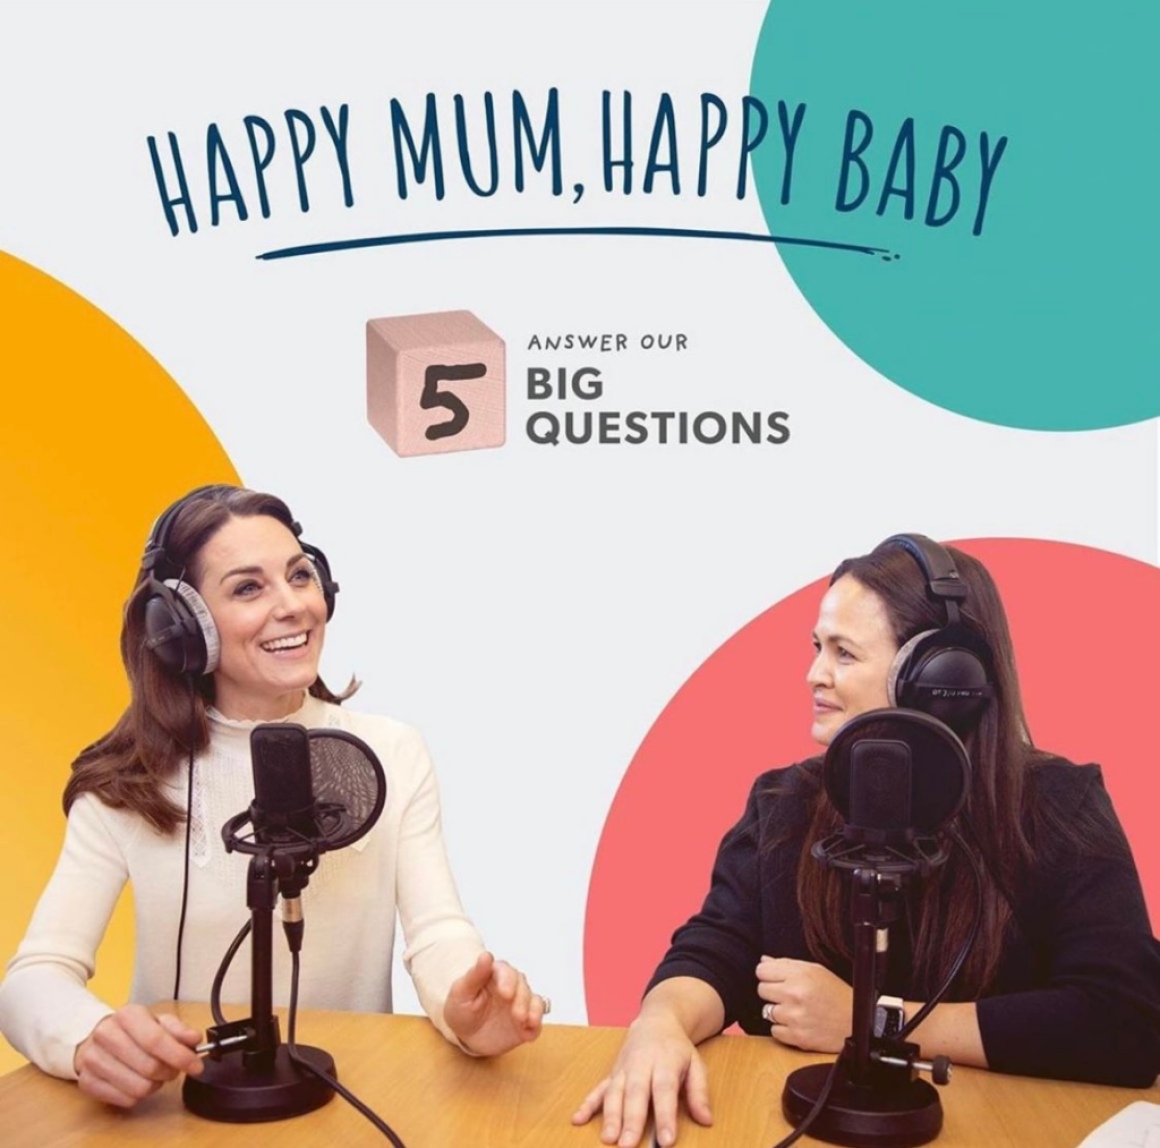 Kate Middleton spoke about hyperemesis gravidarum on the Happy Mum, Happy Baby podcast